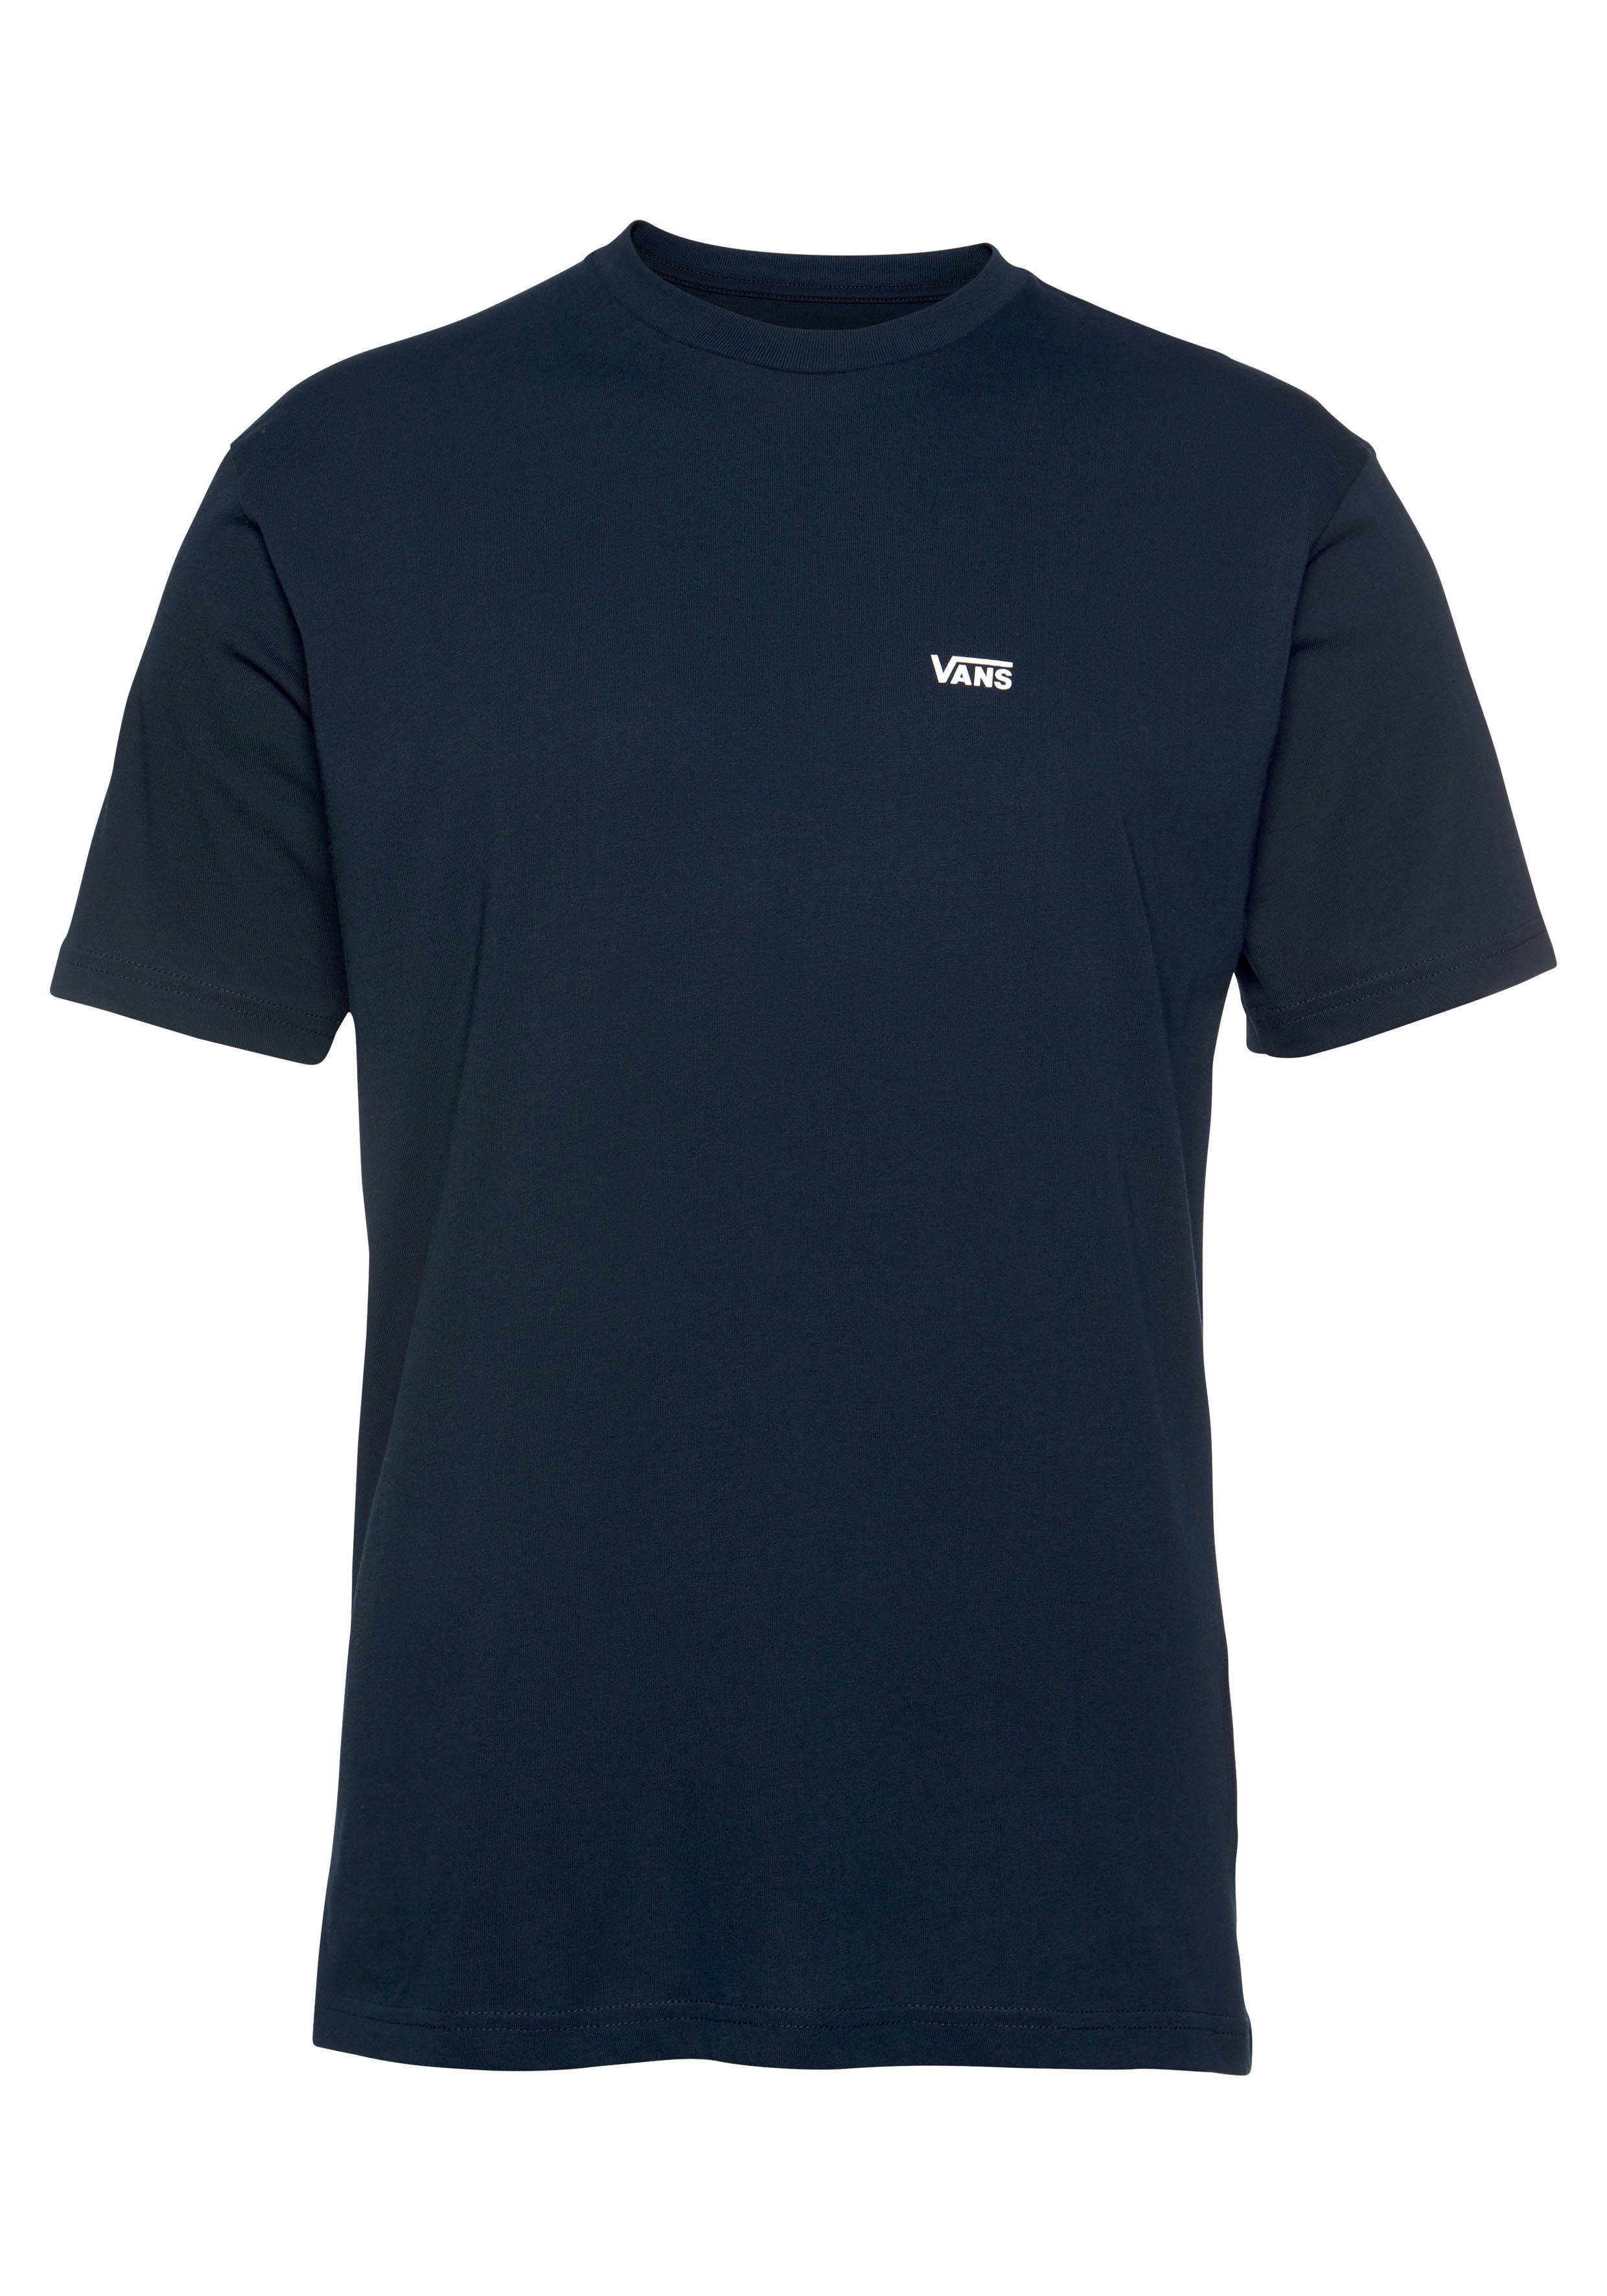 LOGO LEFT Vans CHEST T-Shirt marine TEE